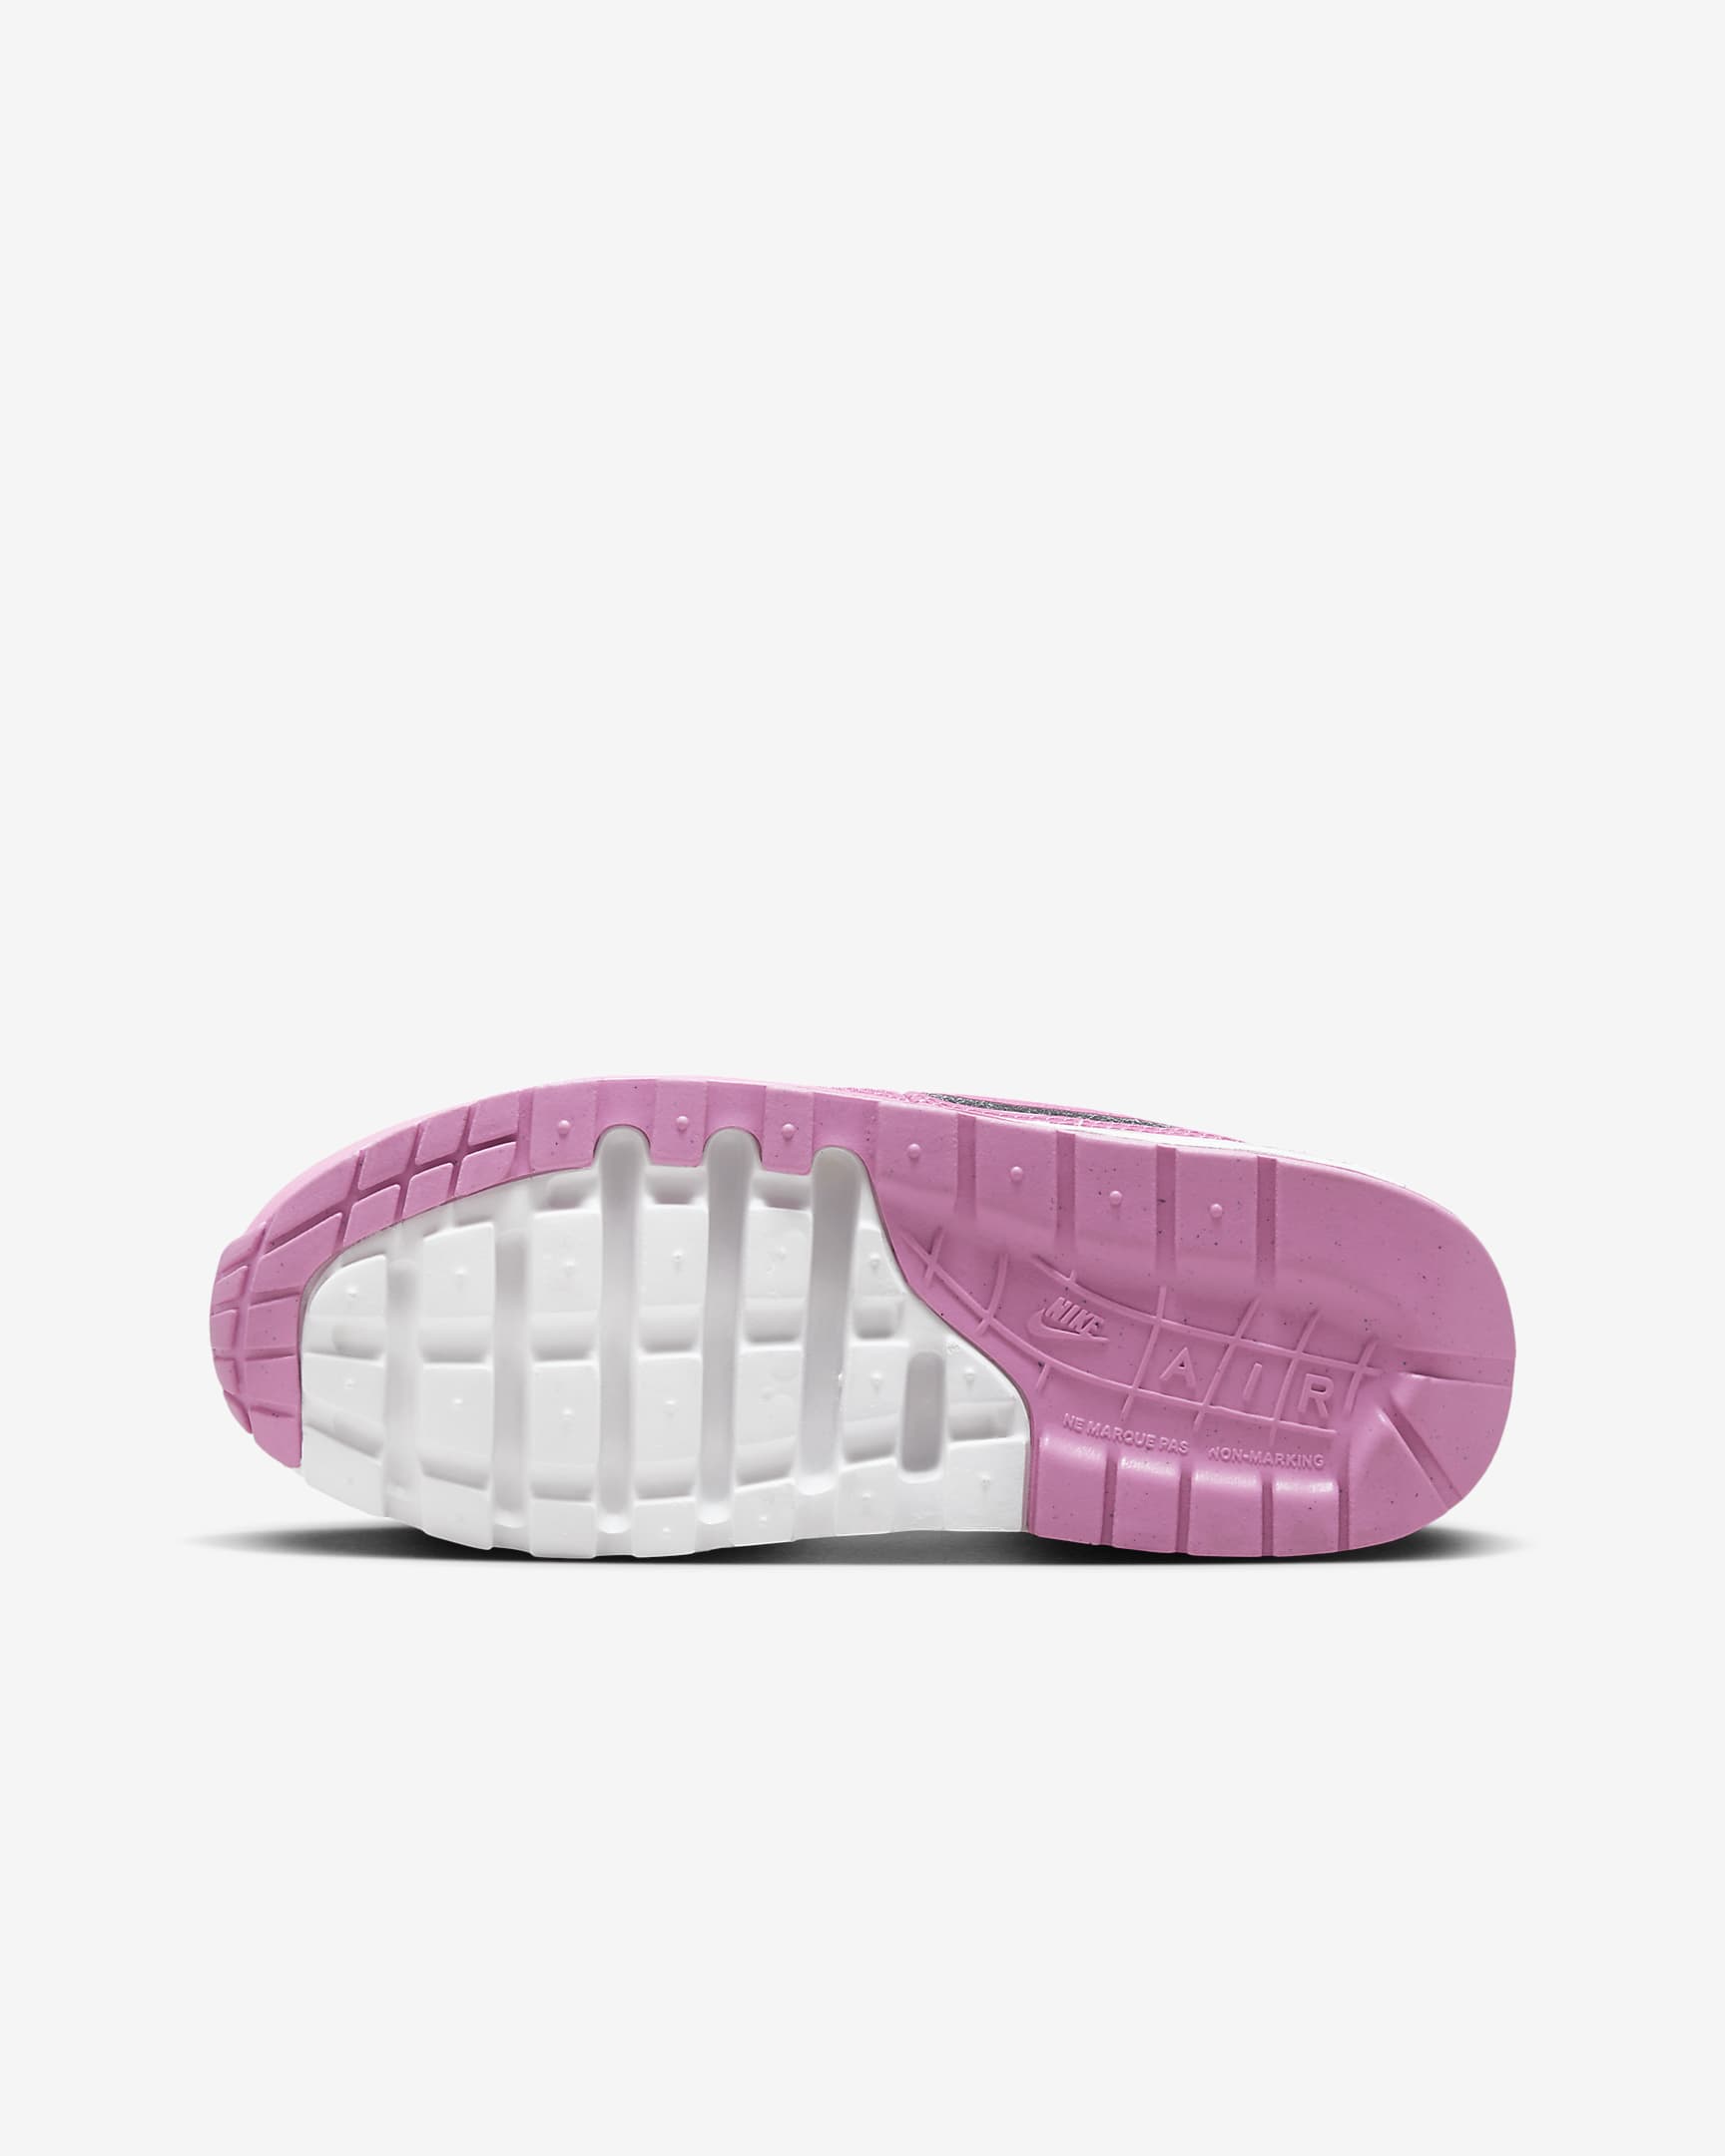 Nike Air Max 1 Older Kids' Shoes - White/Pink Foam/Playful Pink